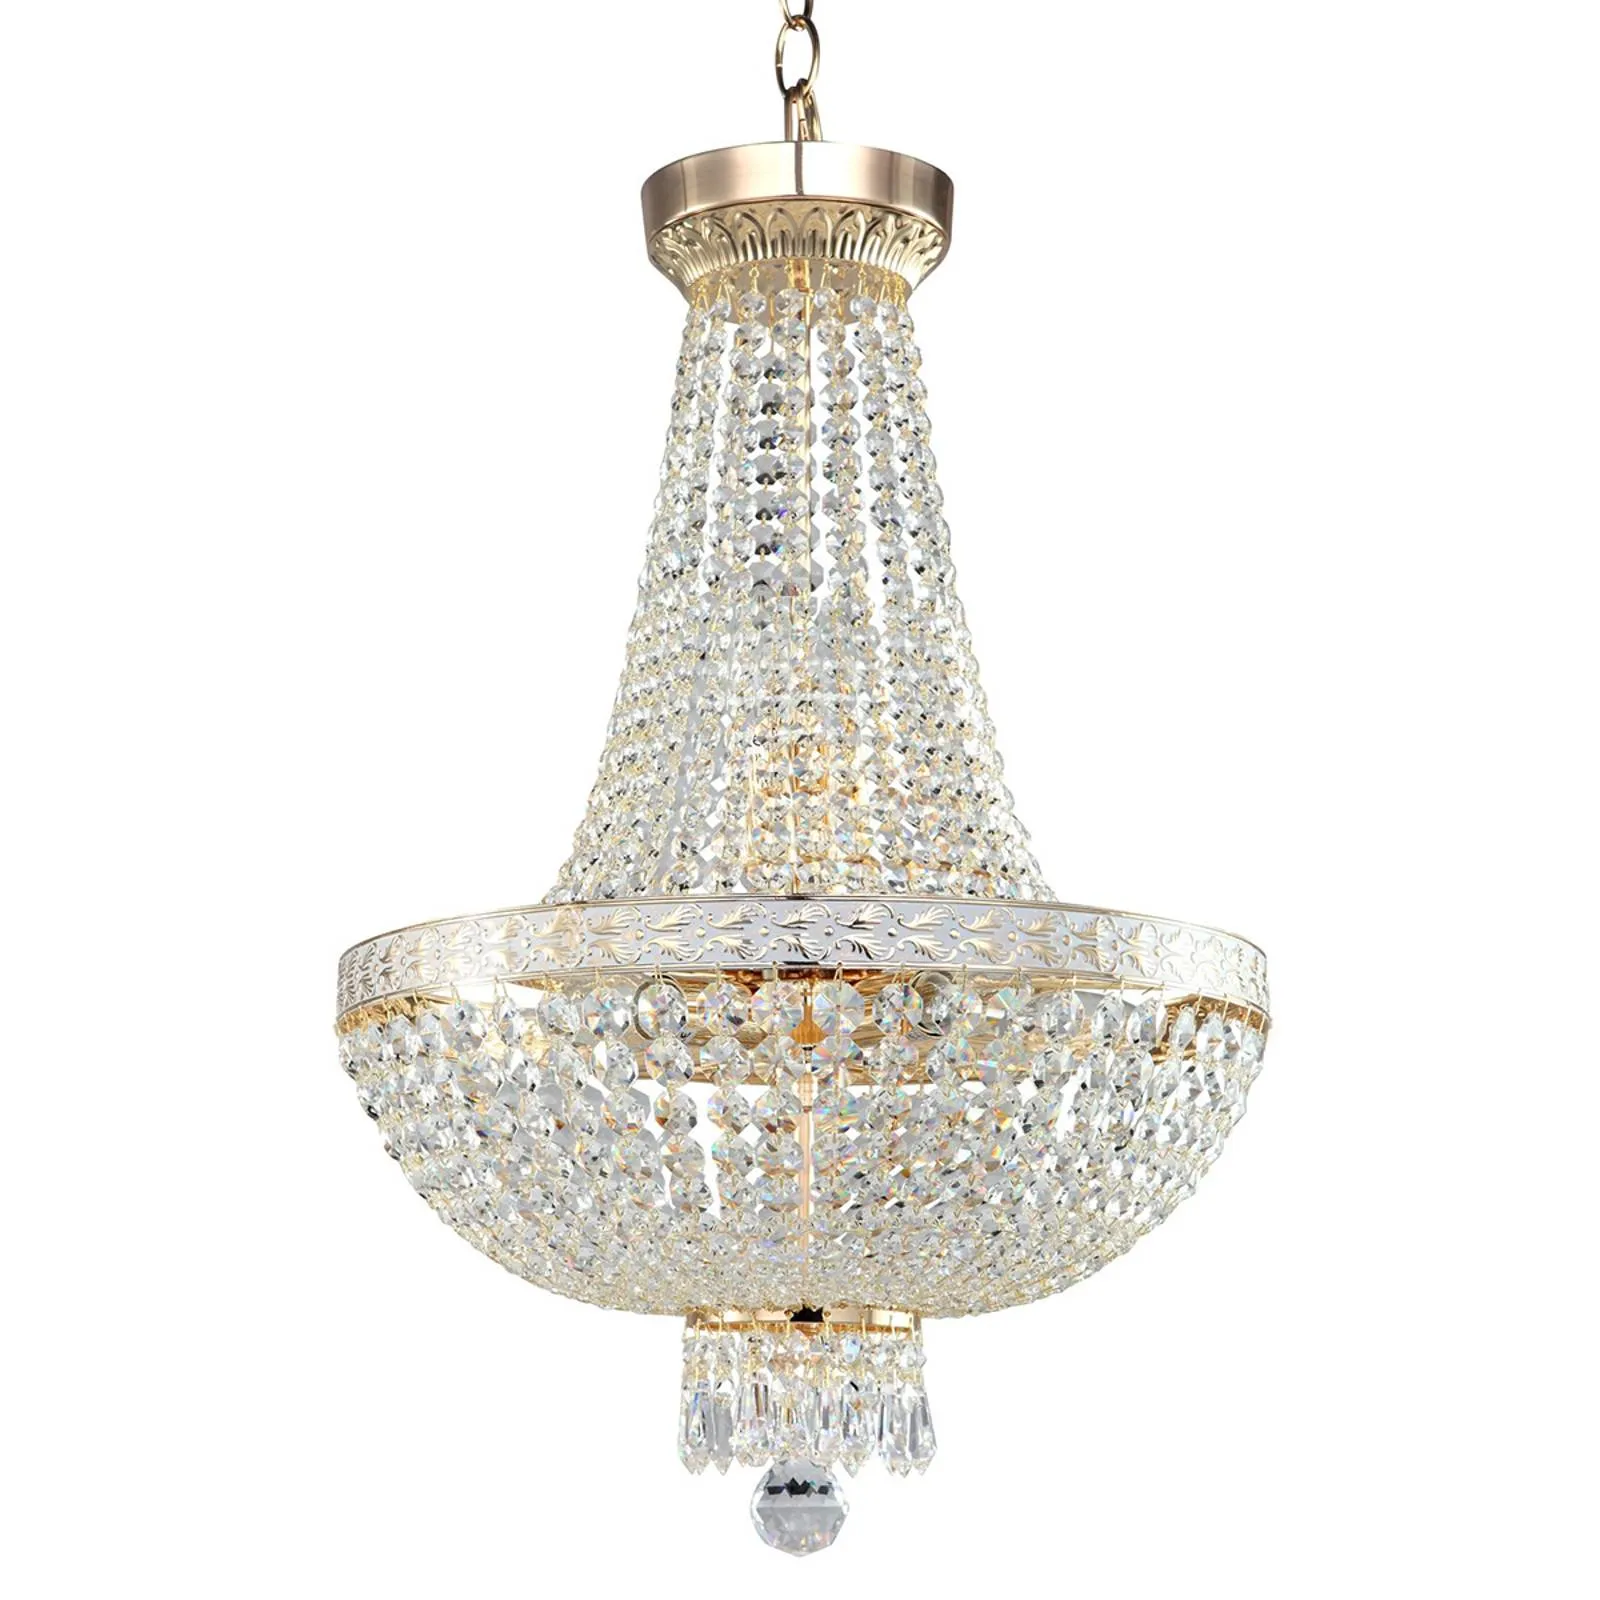 Bella chandelier with lavish hanging elements